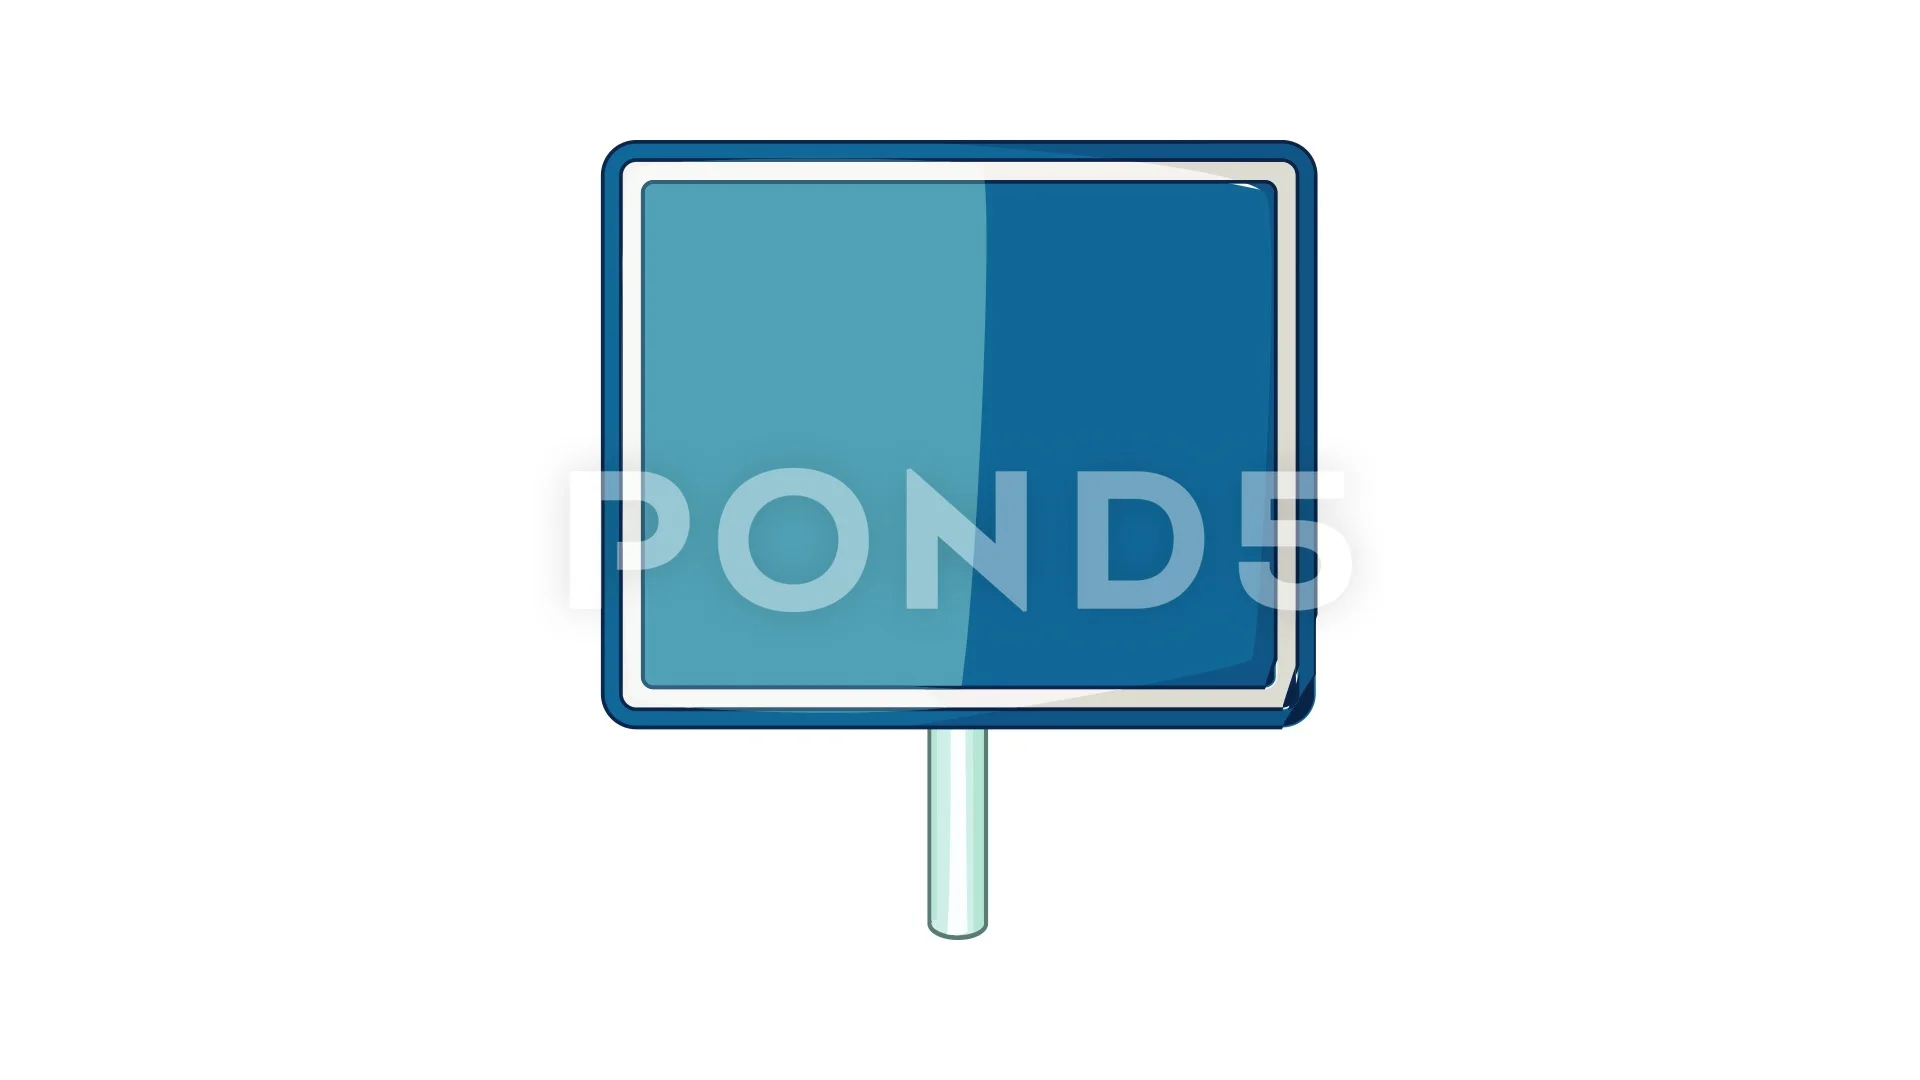 blank blue street sign